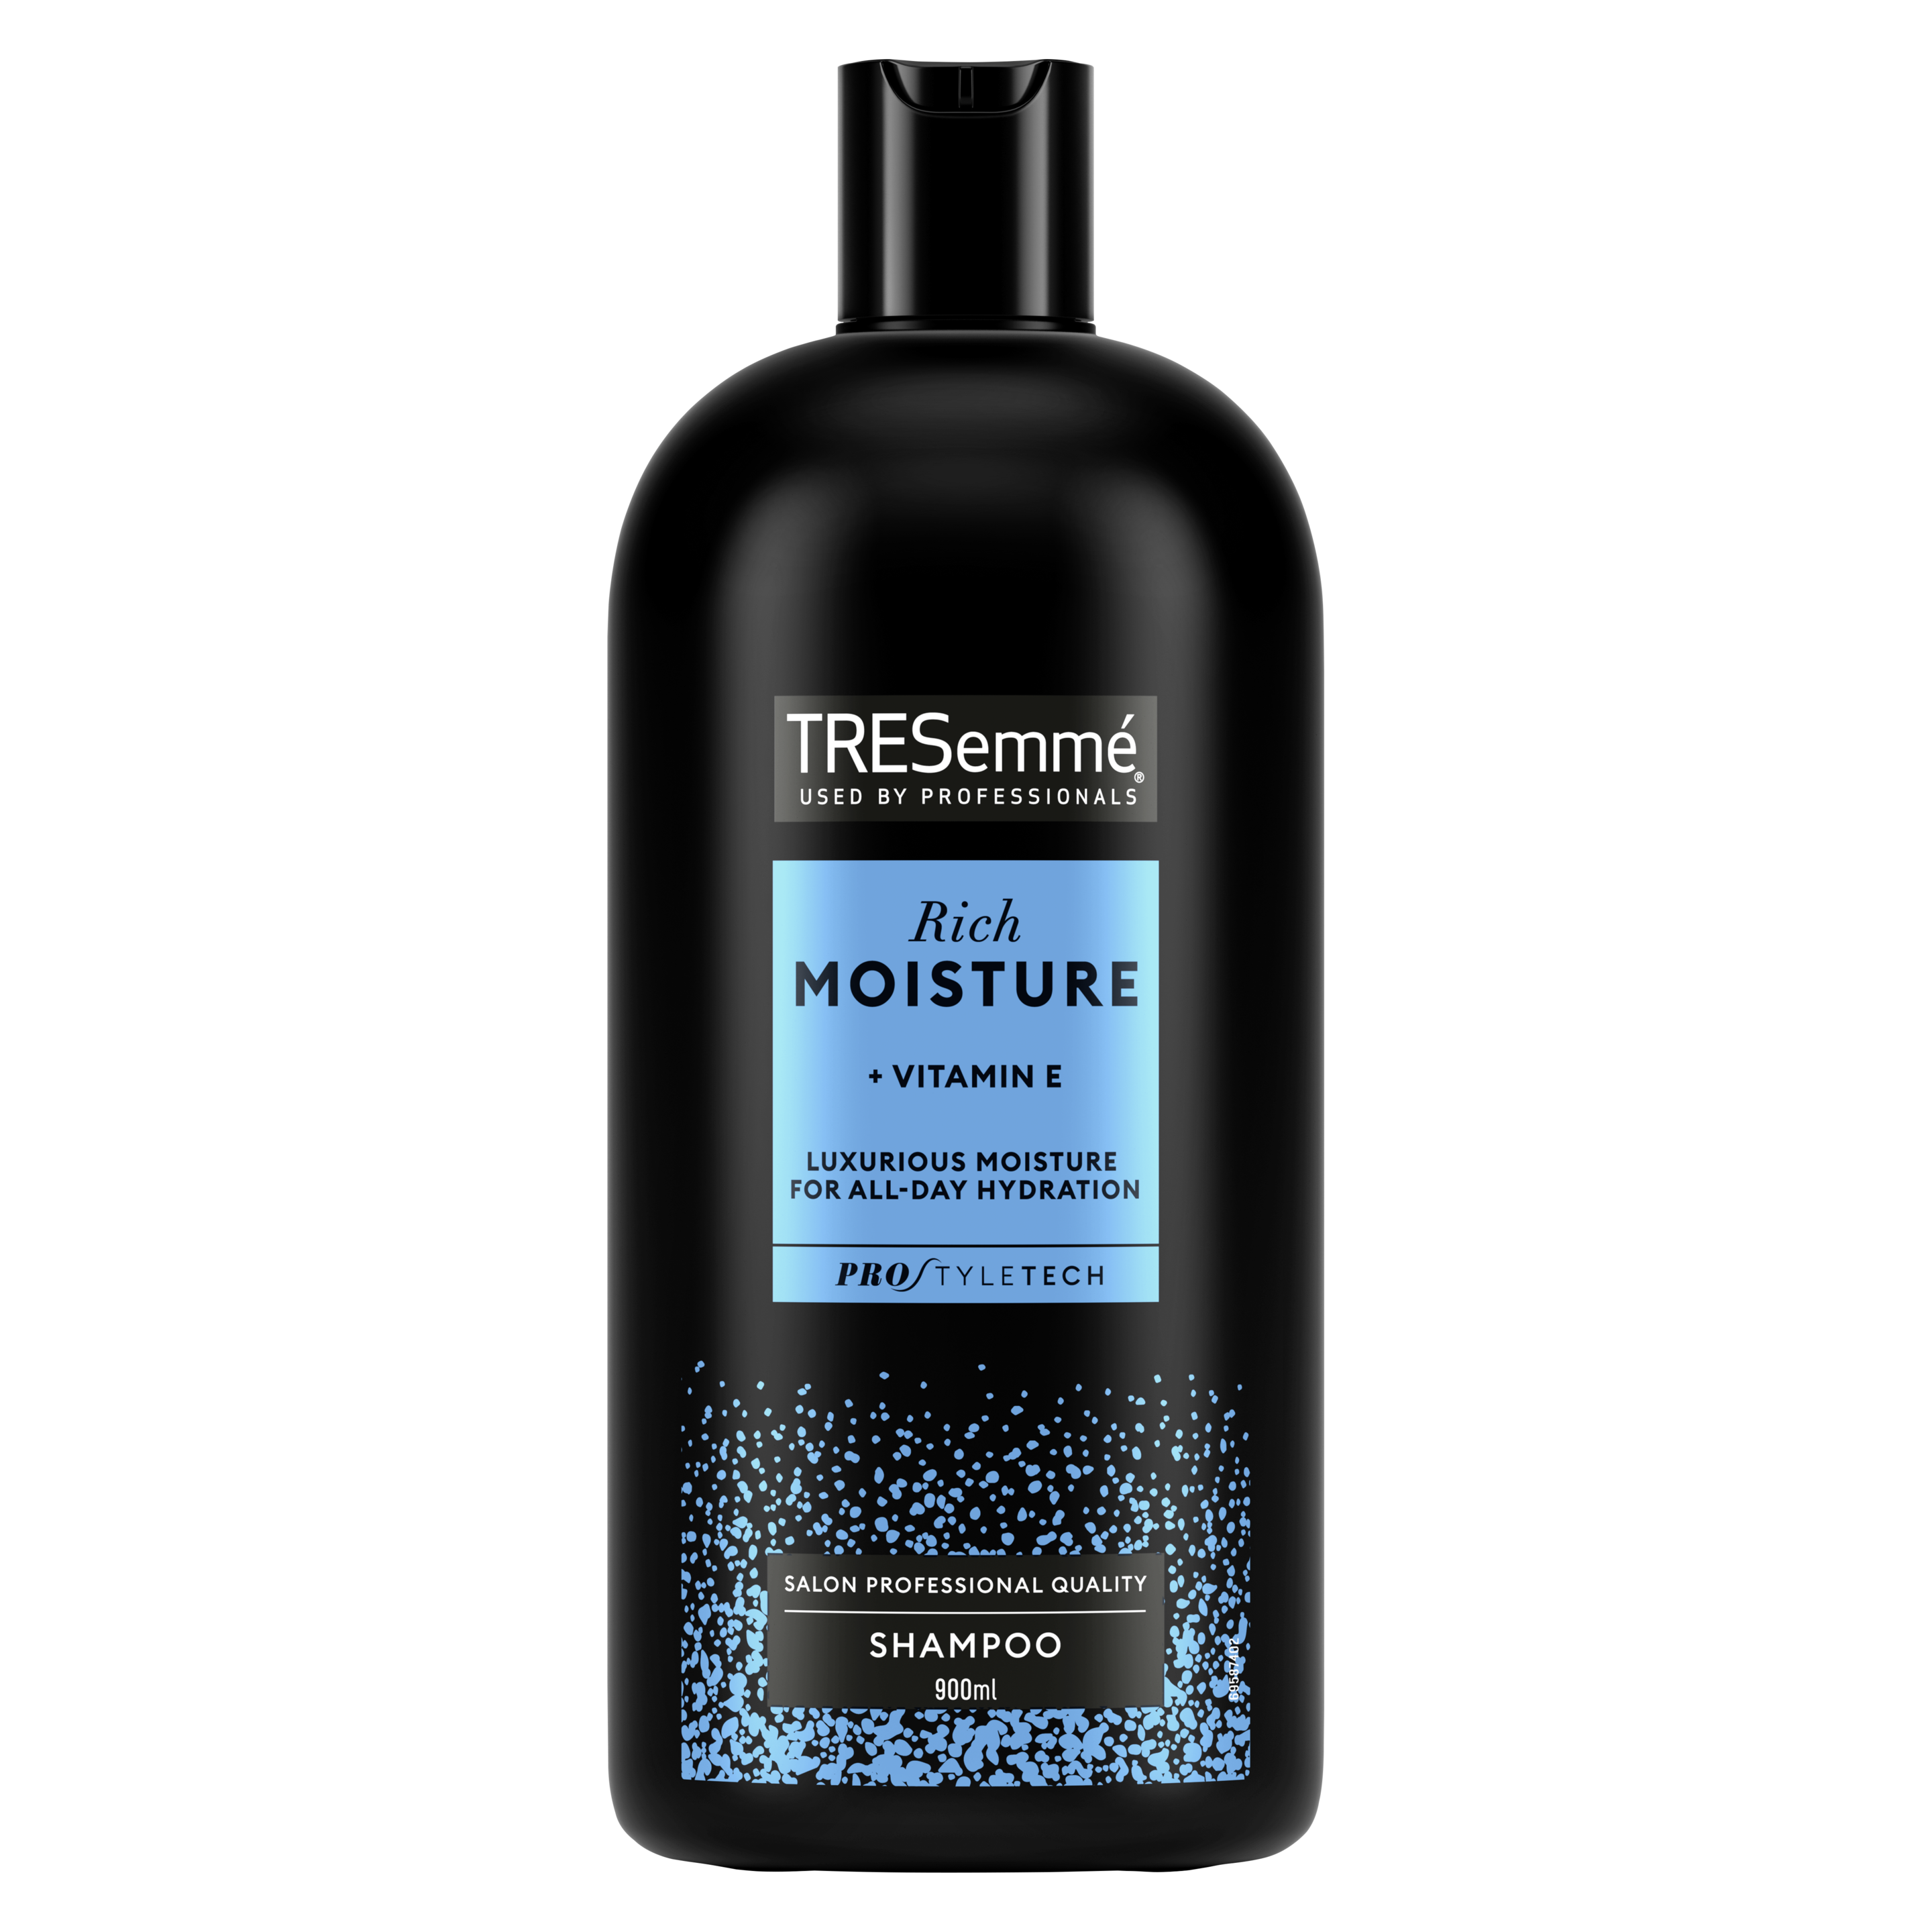 A 900ml bottle of TRESemmé Moisture Rich Shampoo front of pack image